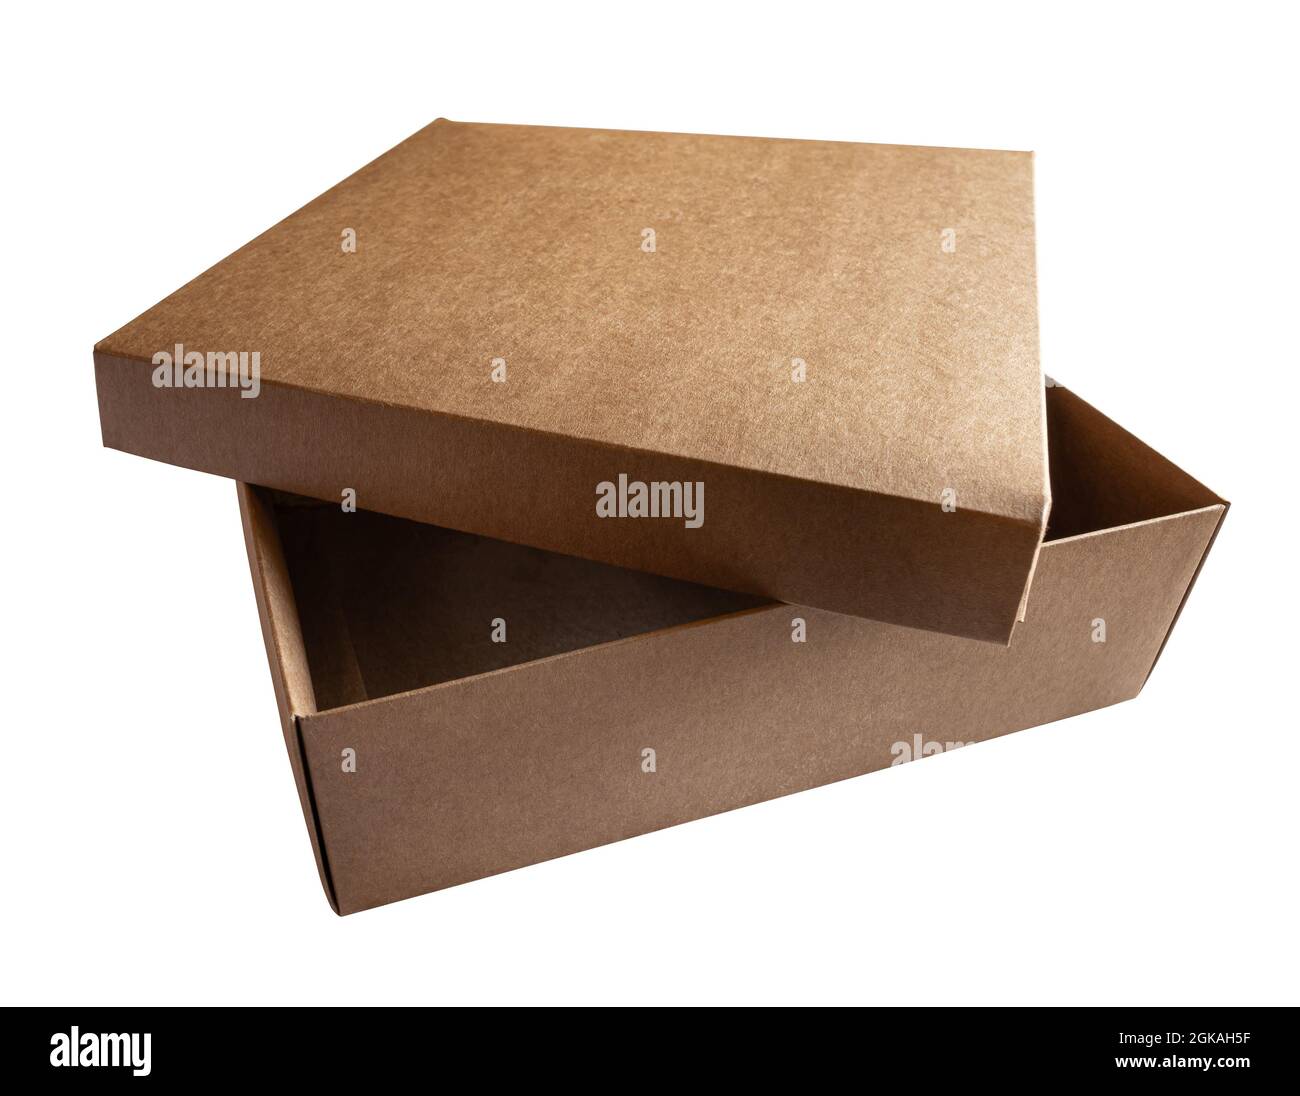 Open cardboard box isolated on white background Stock Photo